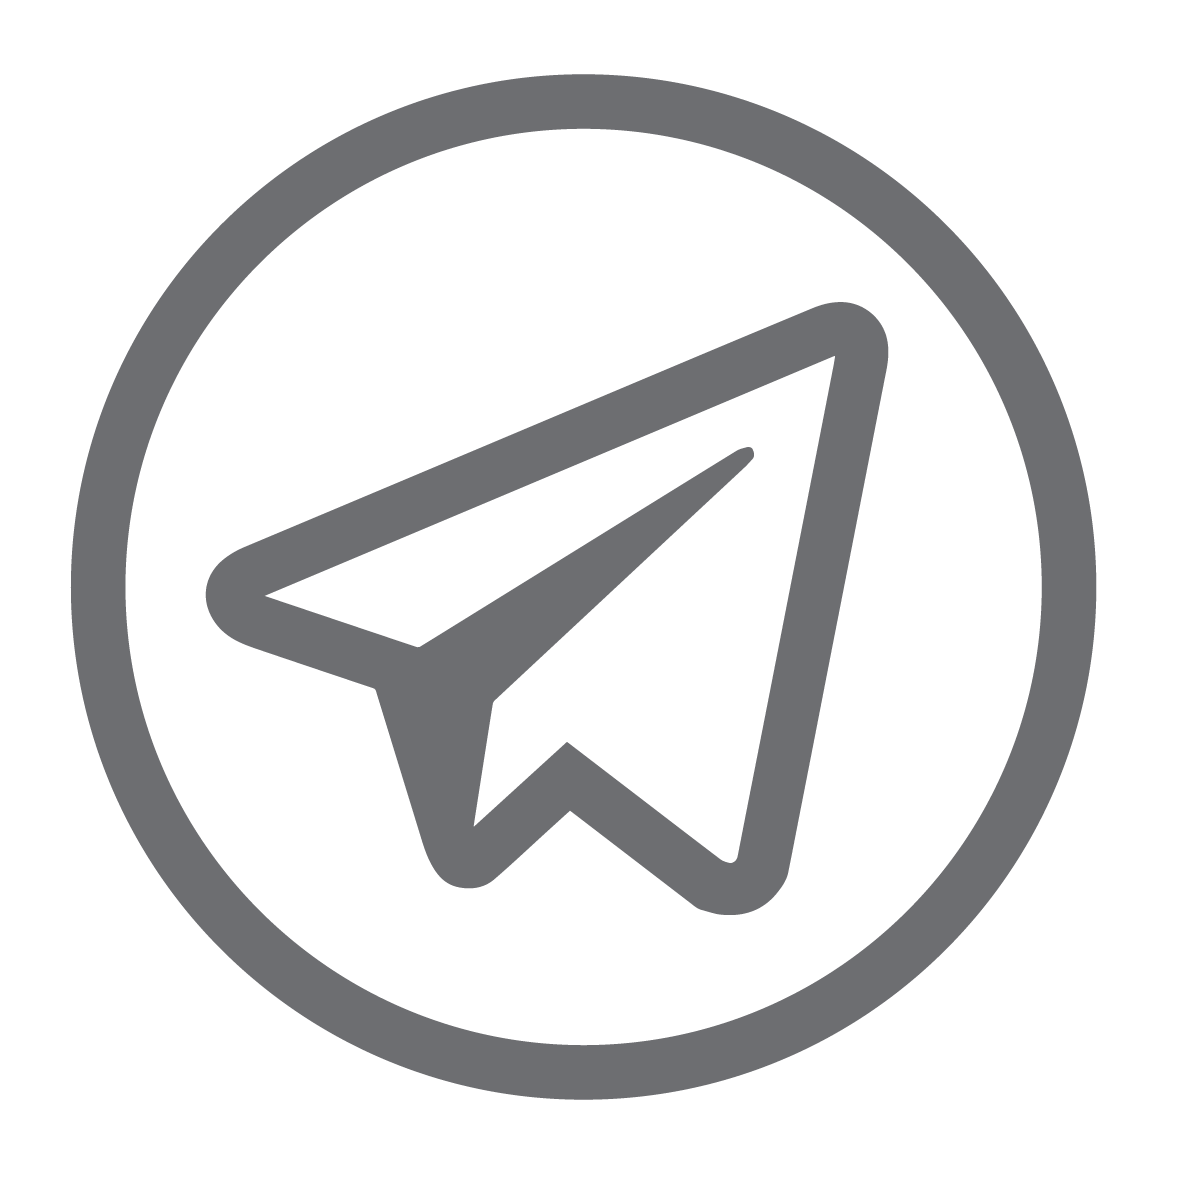 Телеграм лого на белом фоне